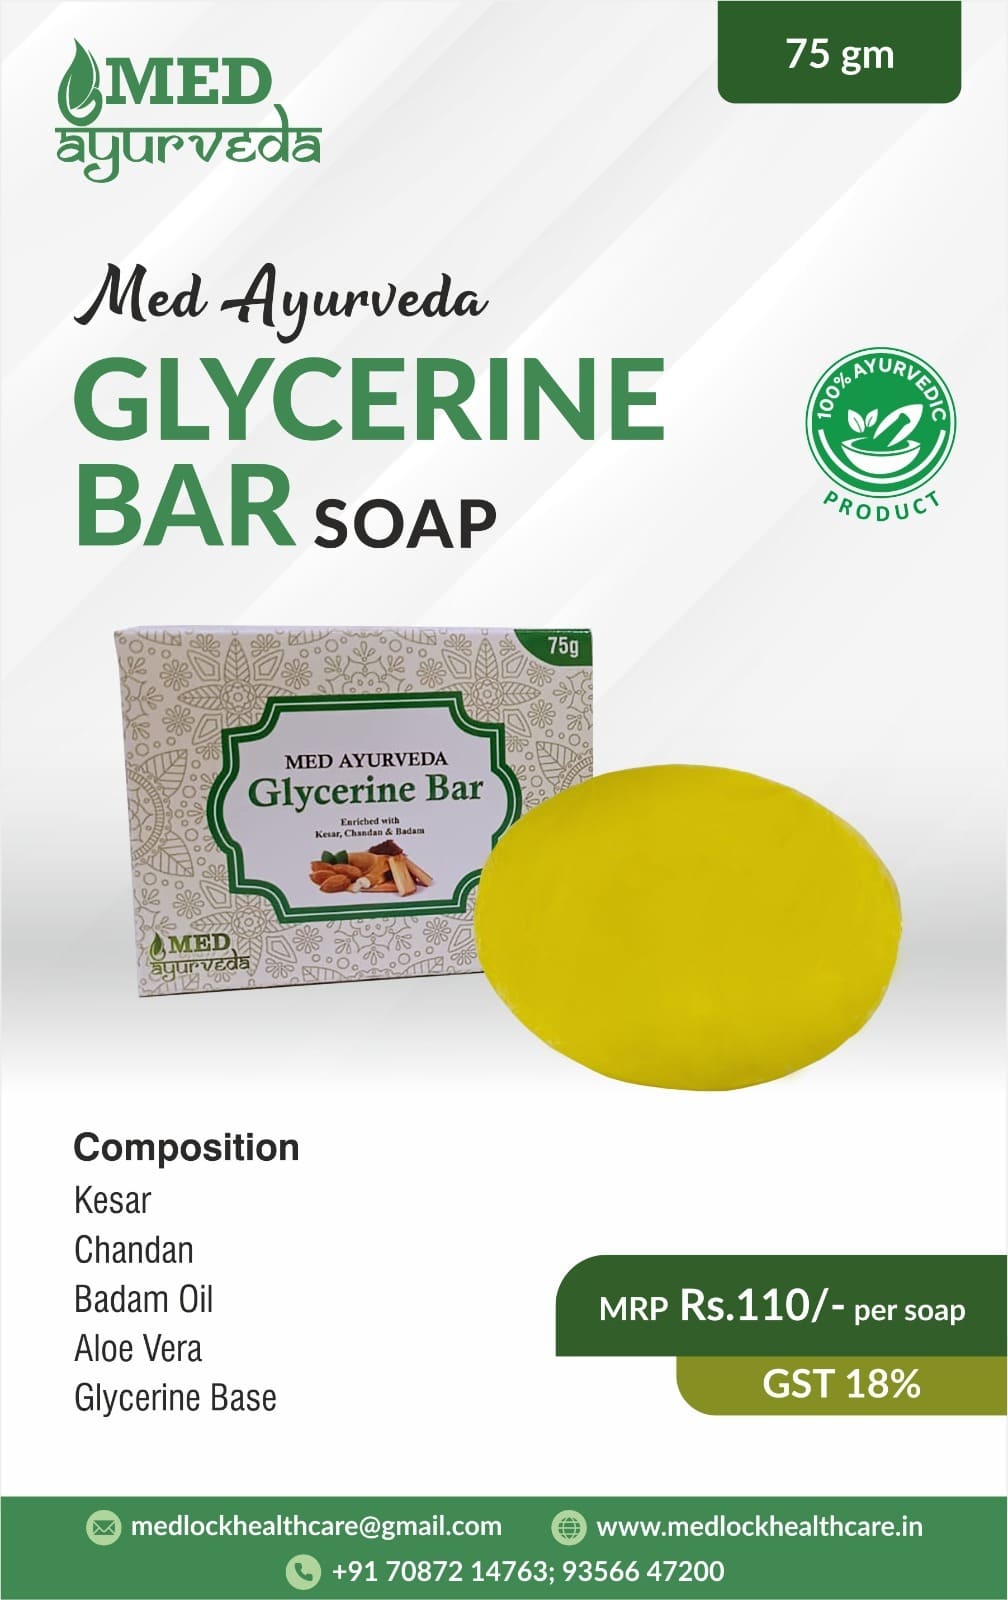 Glycerine soap